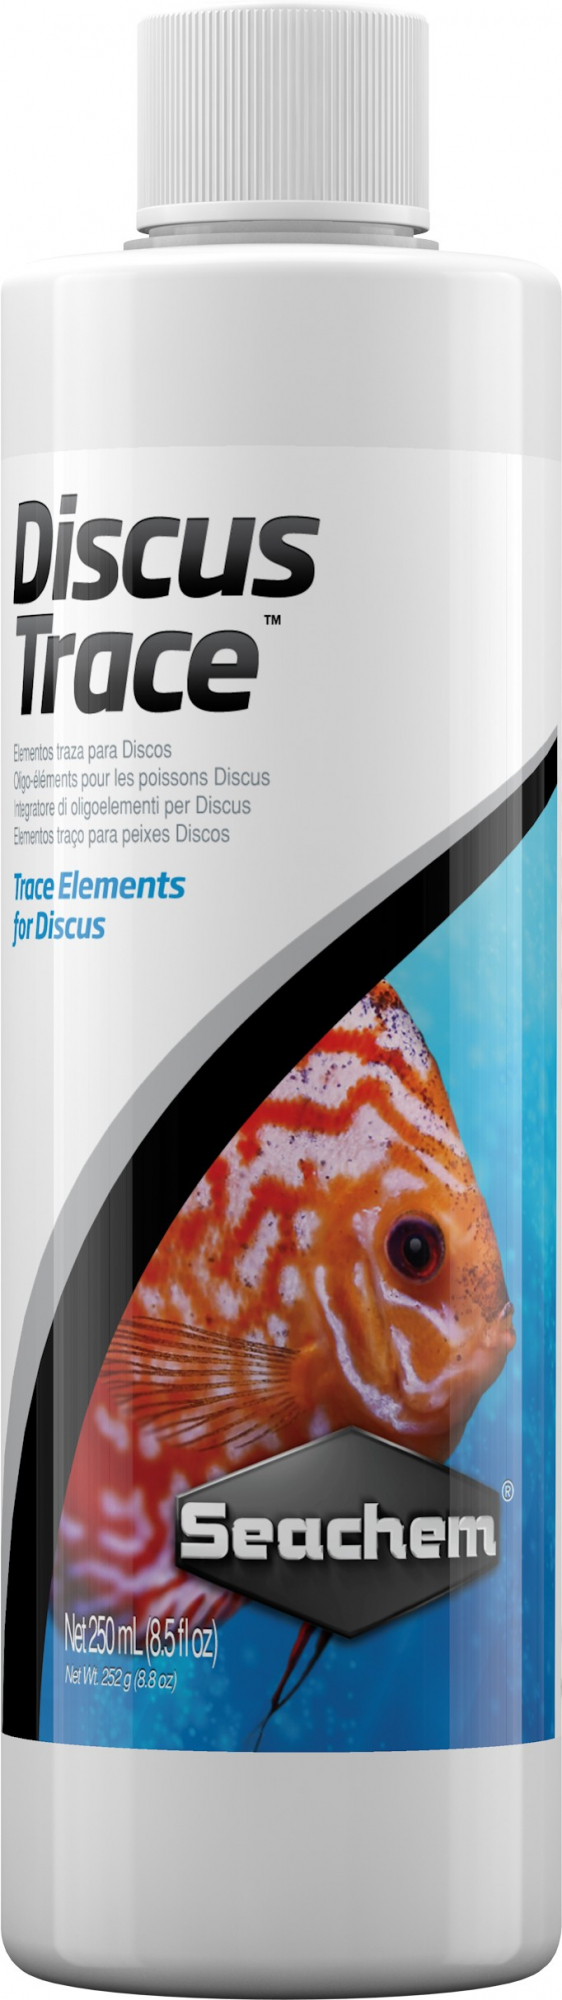 Vitaminas Discus Trace con oligo-elementos 